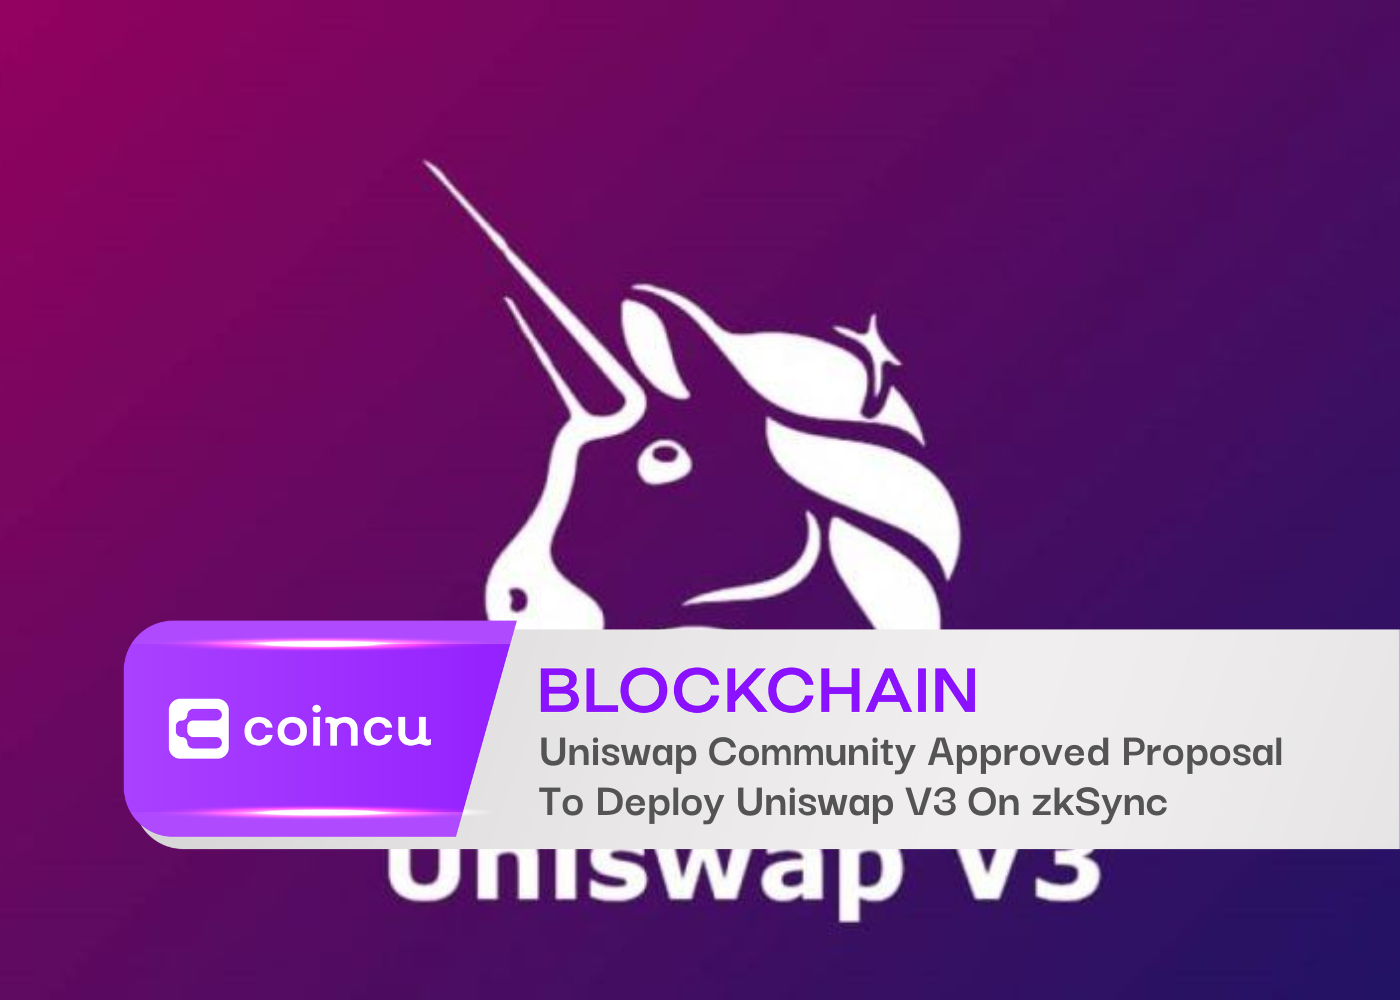 Uniswap Community Approved Proposal To Deploy Uniswap V3 On zkSync